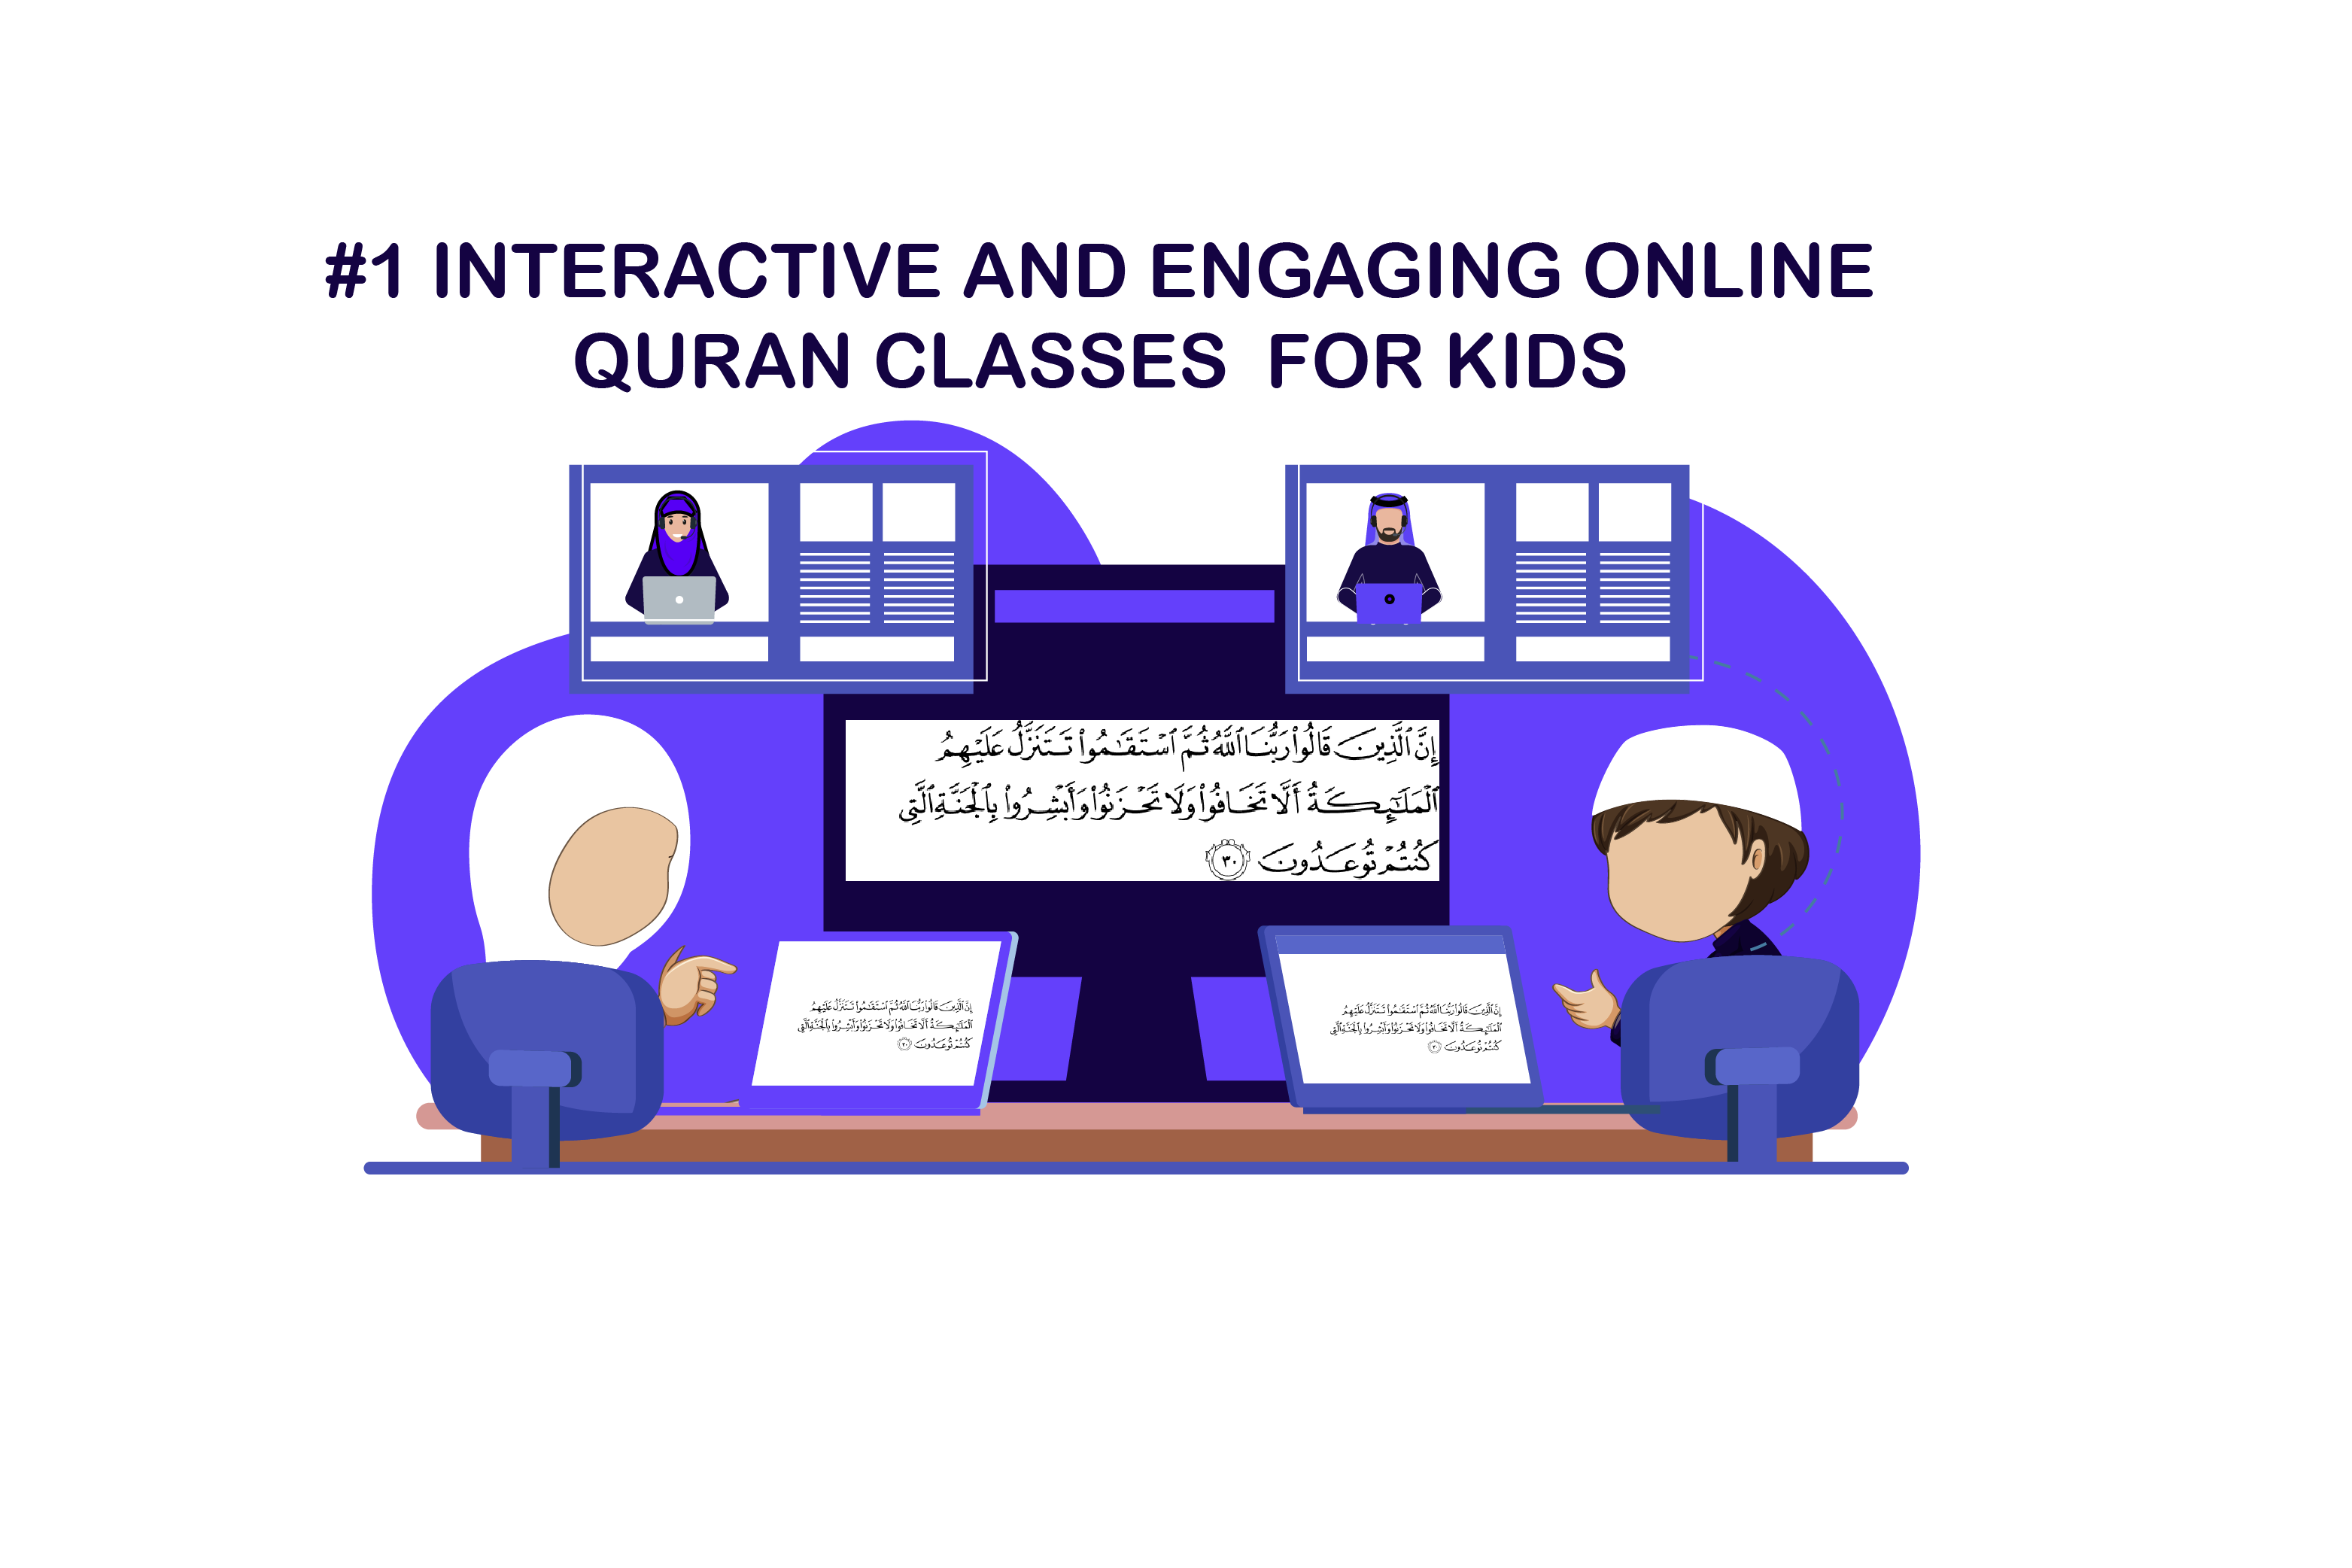 Quran classes online for kids'